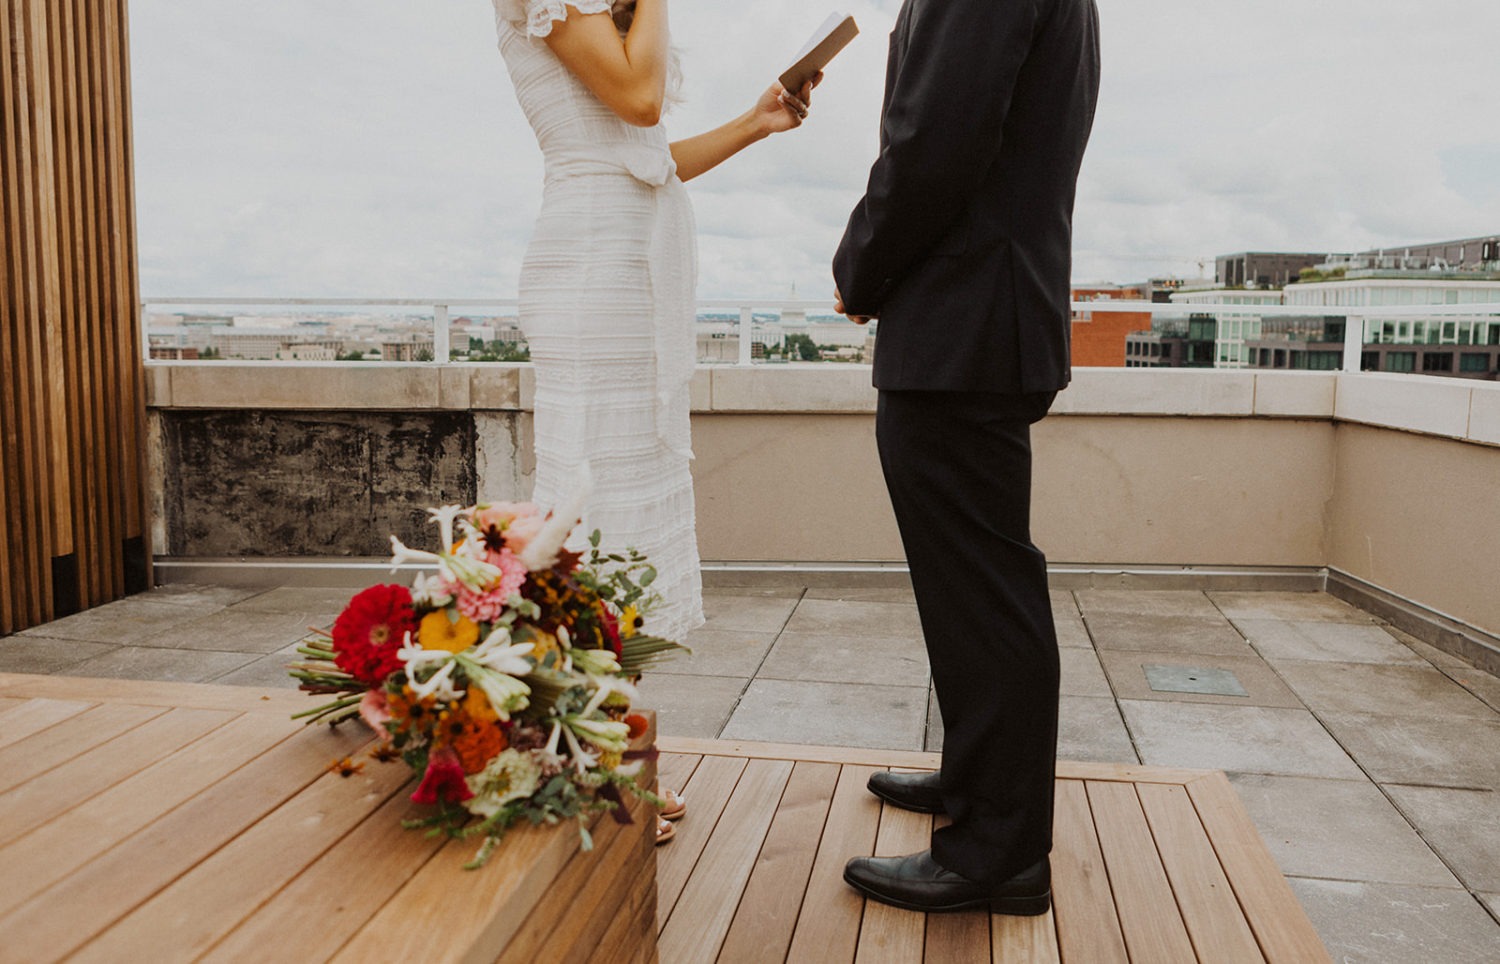 Couple exchanges vows at Washington DC rooftop elopement